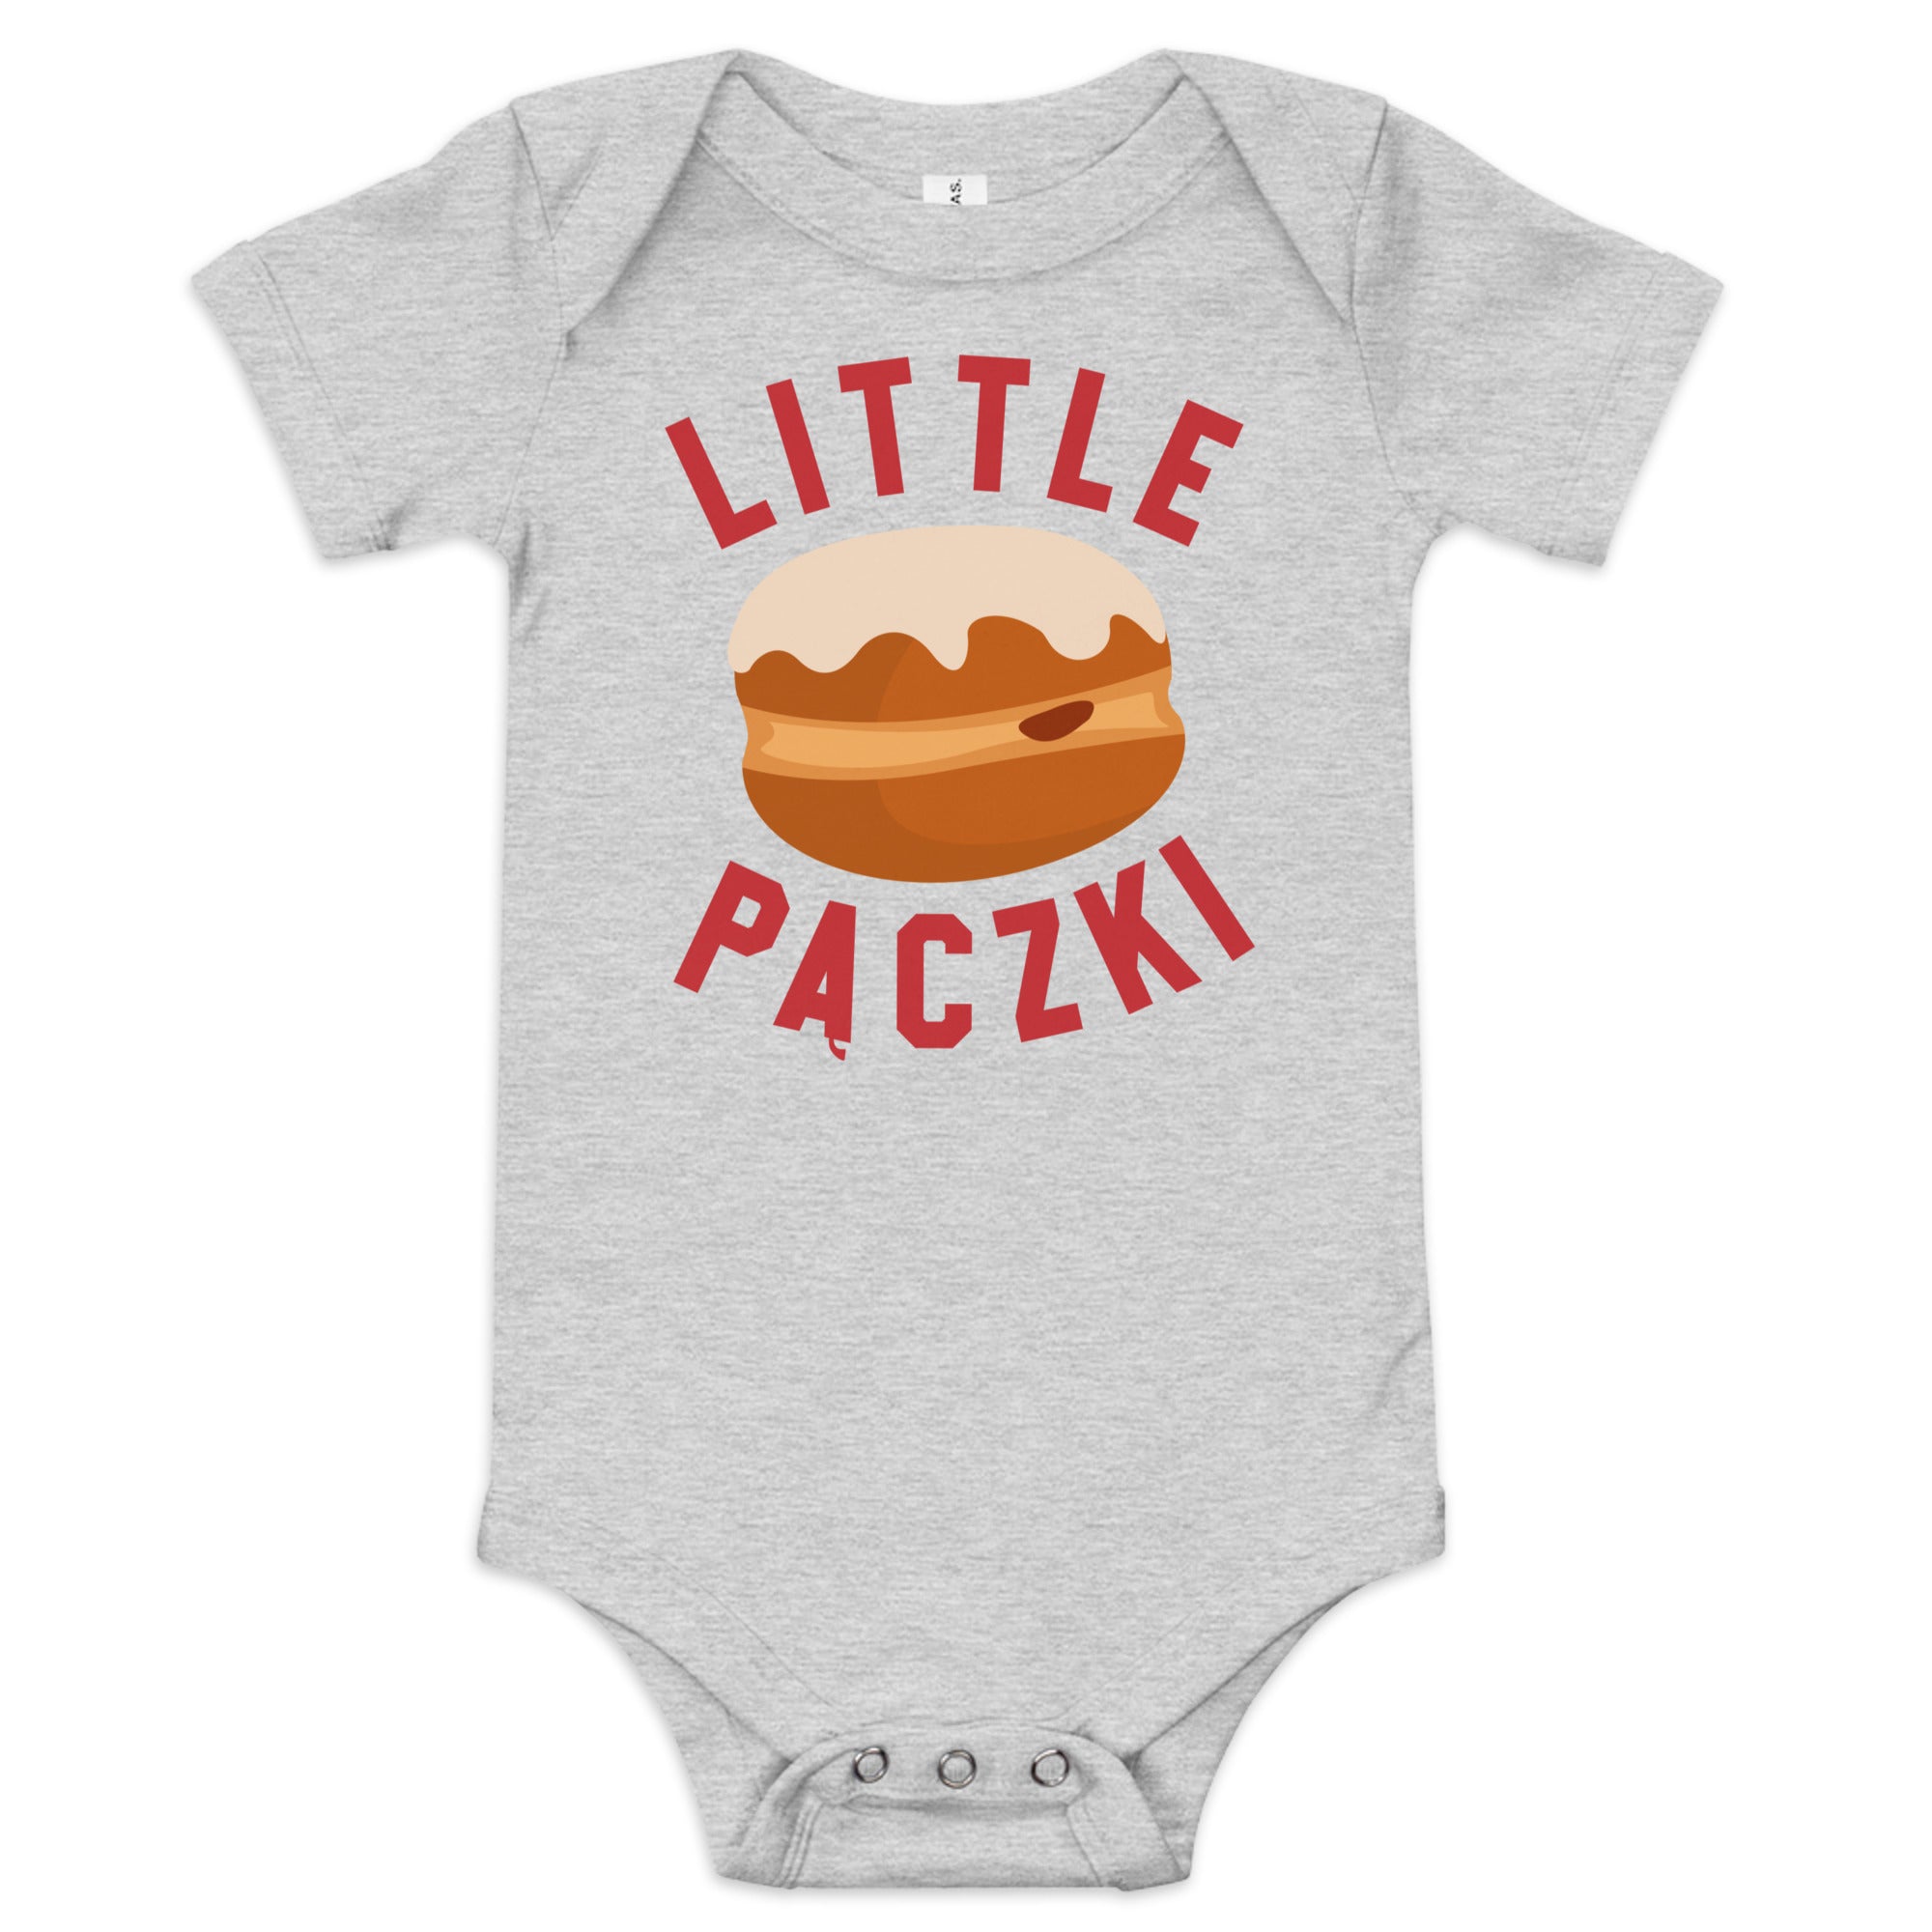 Little Paczki - Baby Onsie - Red / Gray  3-6m  